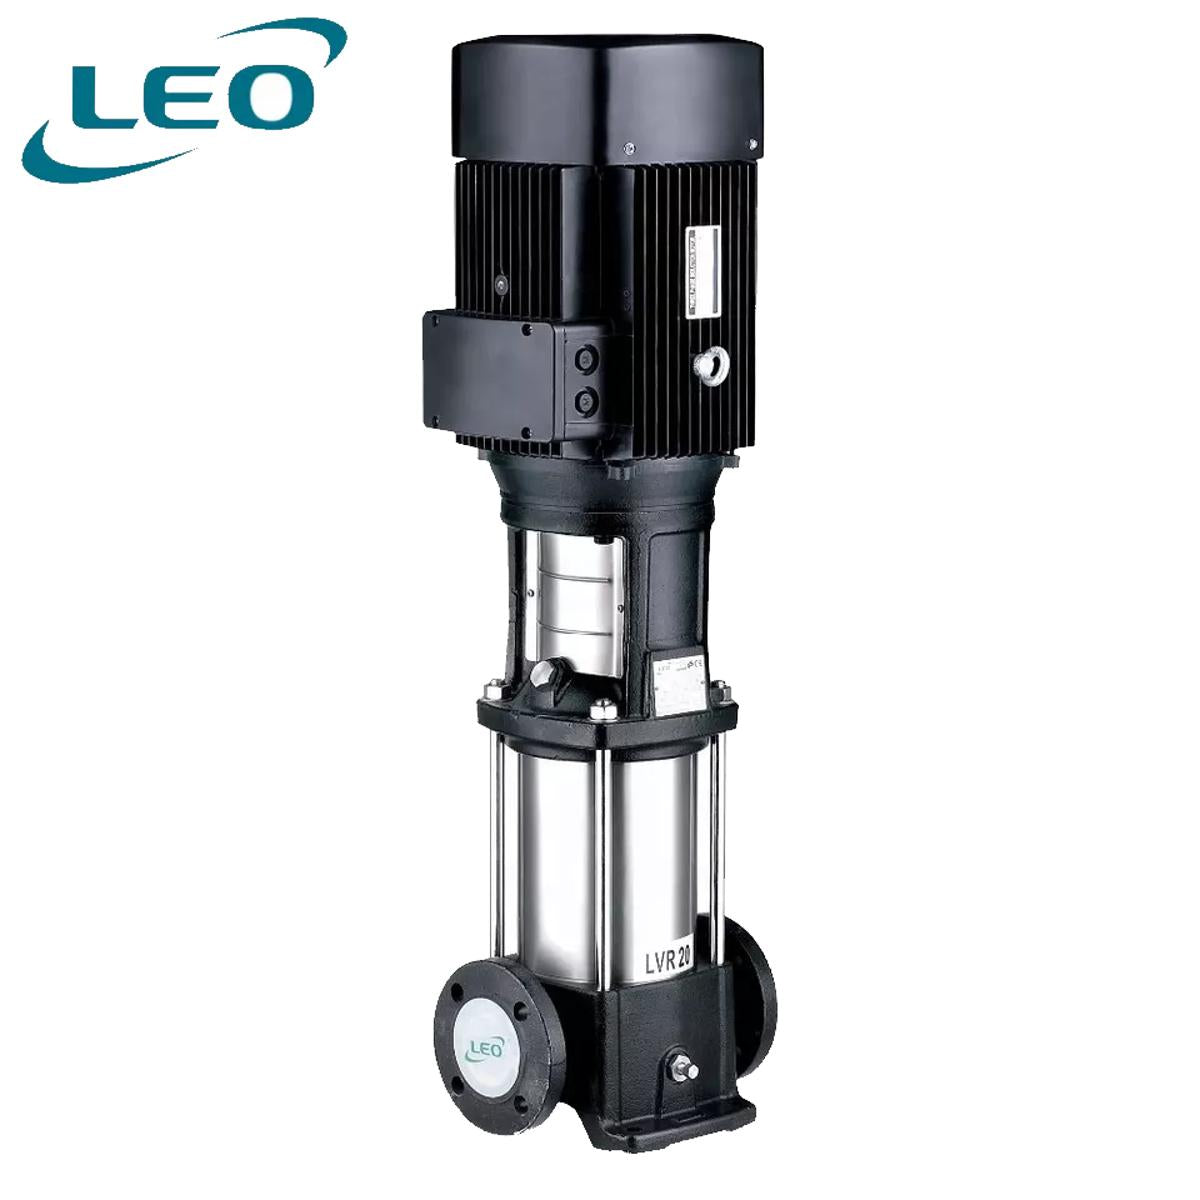 LEO - LVR-2-22 - 2200W - 3 HP (IE2) -  Vertical Multistage Booster  - HIGH PRESSURE Pump - SIZE 1 1-4" X 1 1-4" - THREE PHASE - European STANDARD